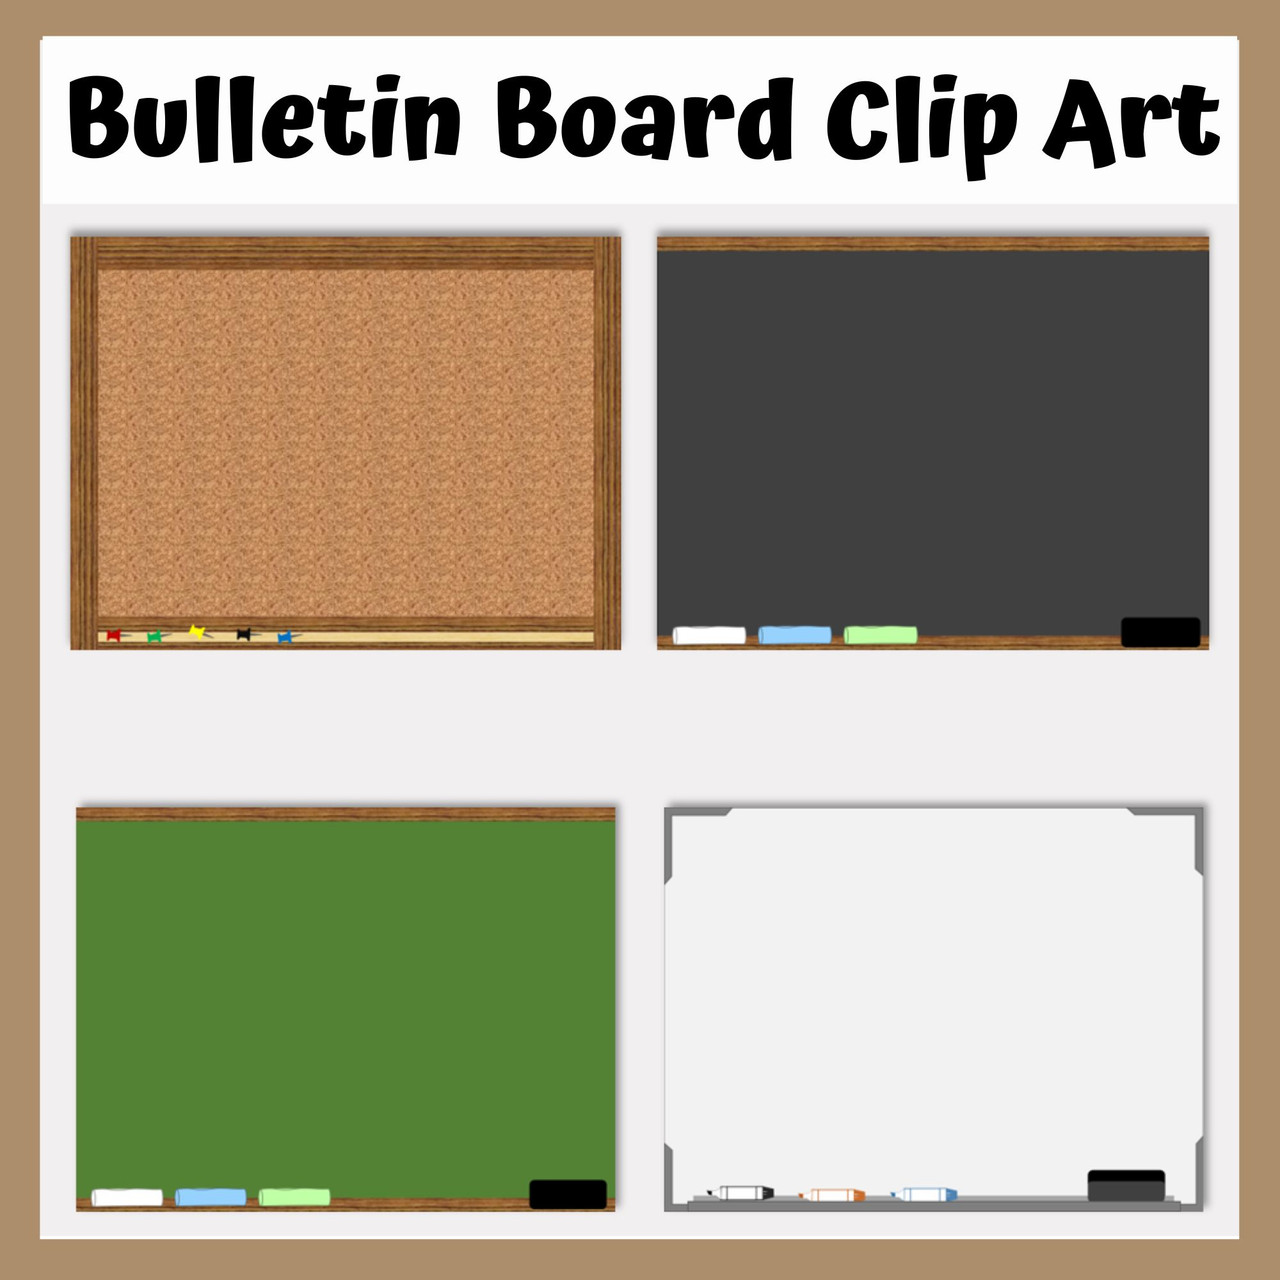 classroom whiteboard clipart